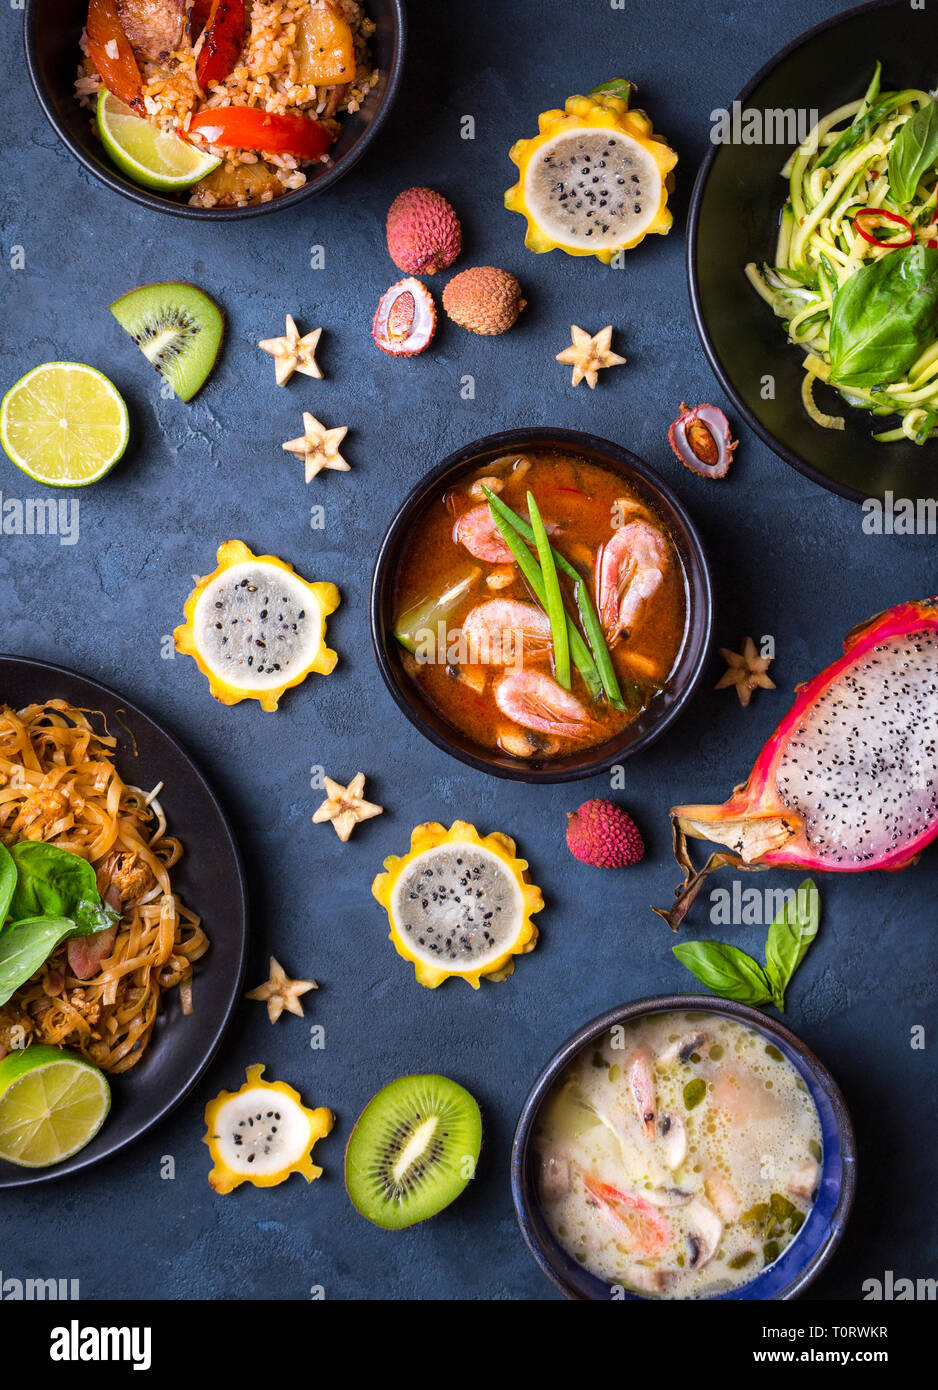 Thai food dishes Stock Photo - Alamy